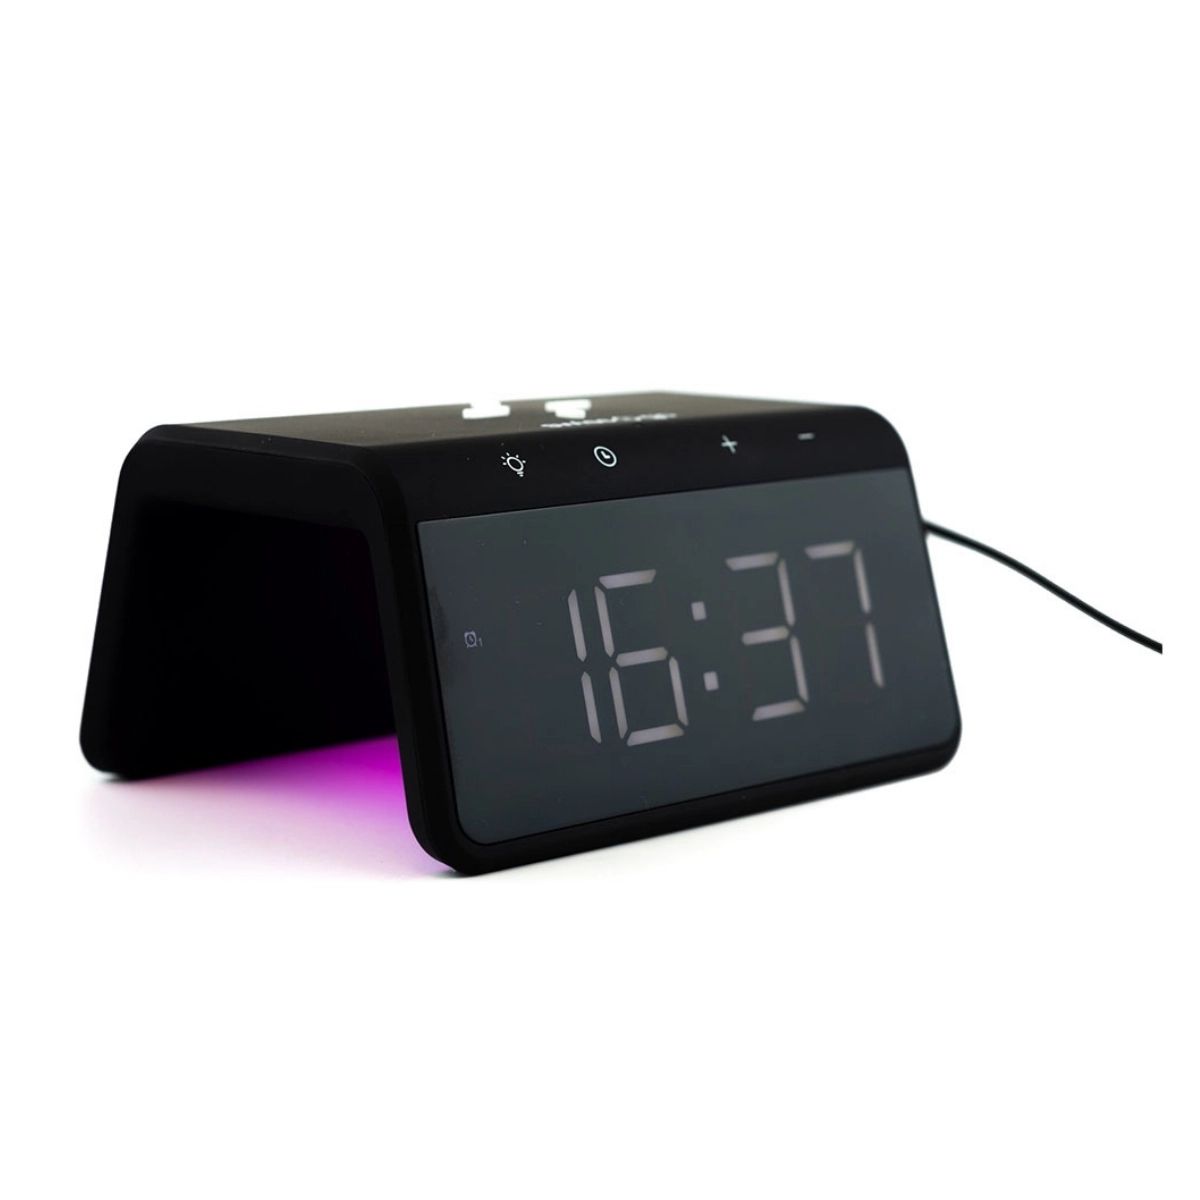 SWI503020 - Reloj Despertador SWISS GO Enea con cargador inalmbrico - iluminacin nocturna LED 8 colores - Puerto USB (SWI503020)